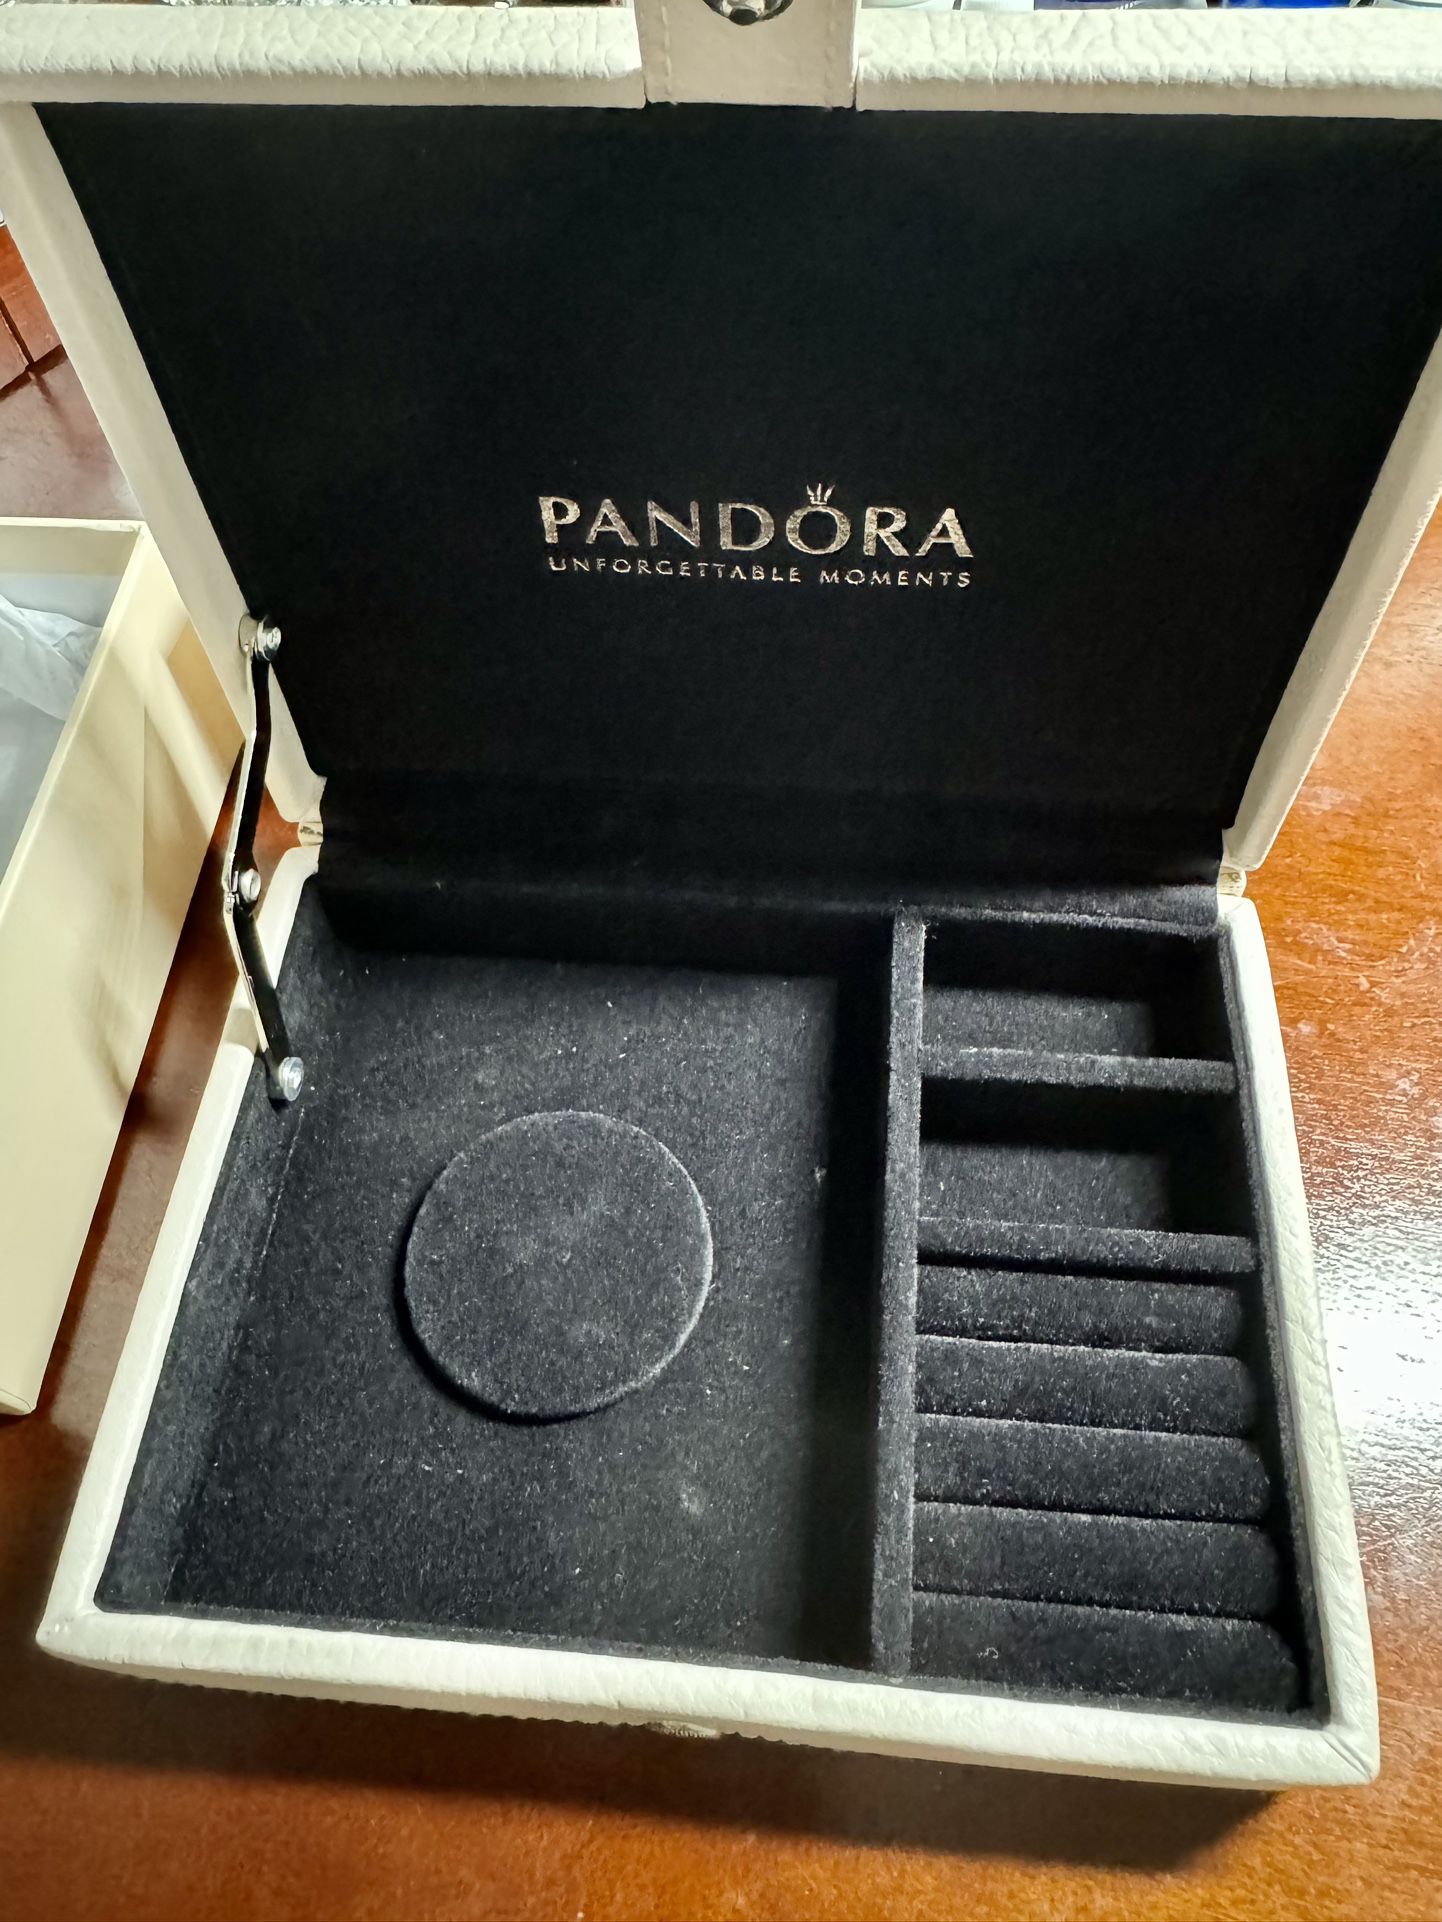 Pandora Genuine Leather Jewelry Gift Box